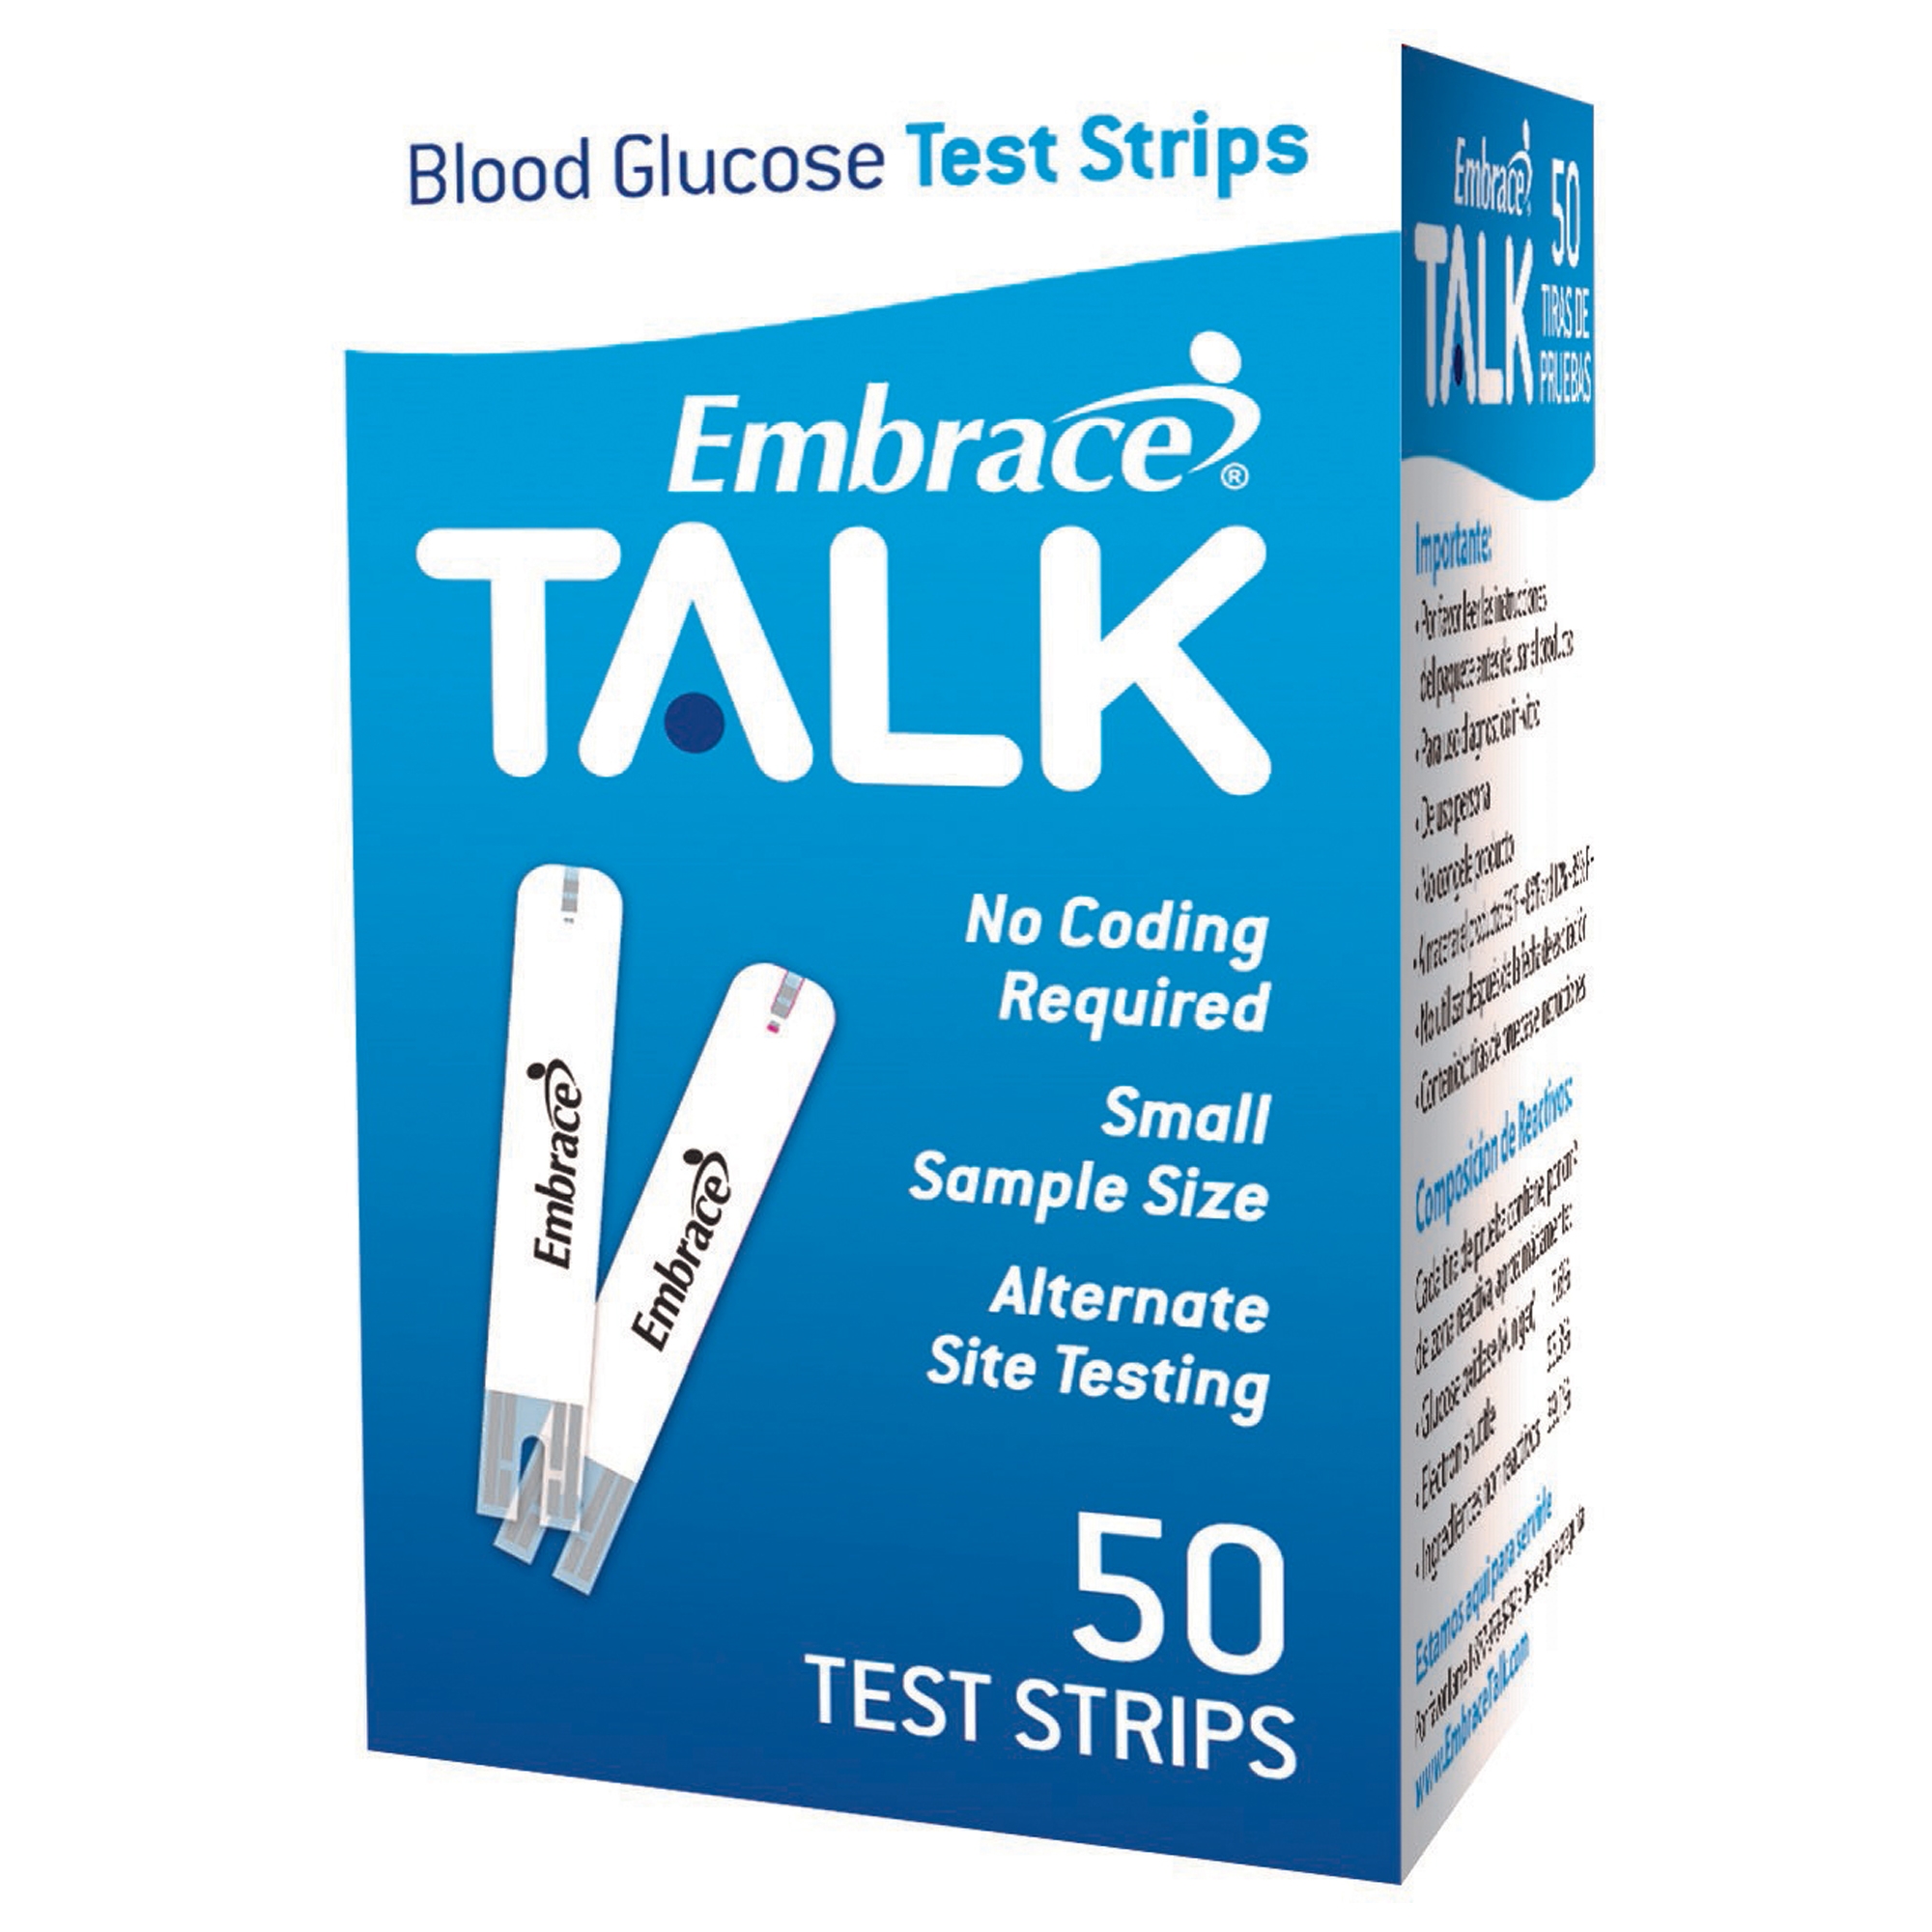 Omnis Health Embrace Blood Glucose Test Strips